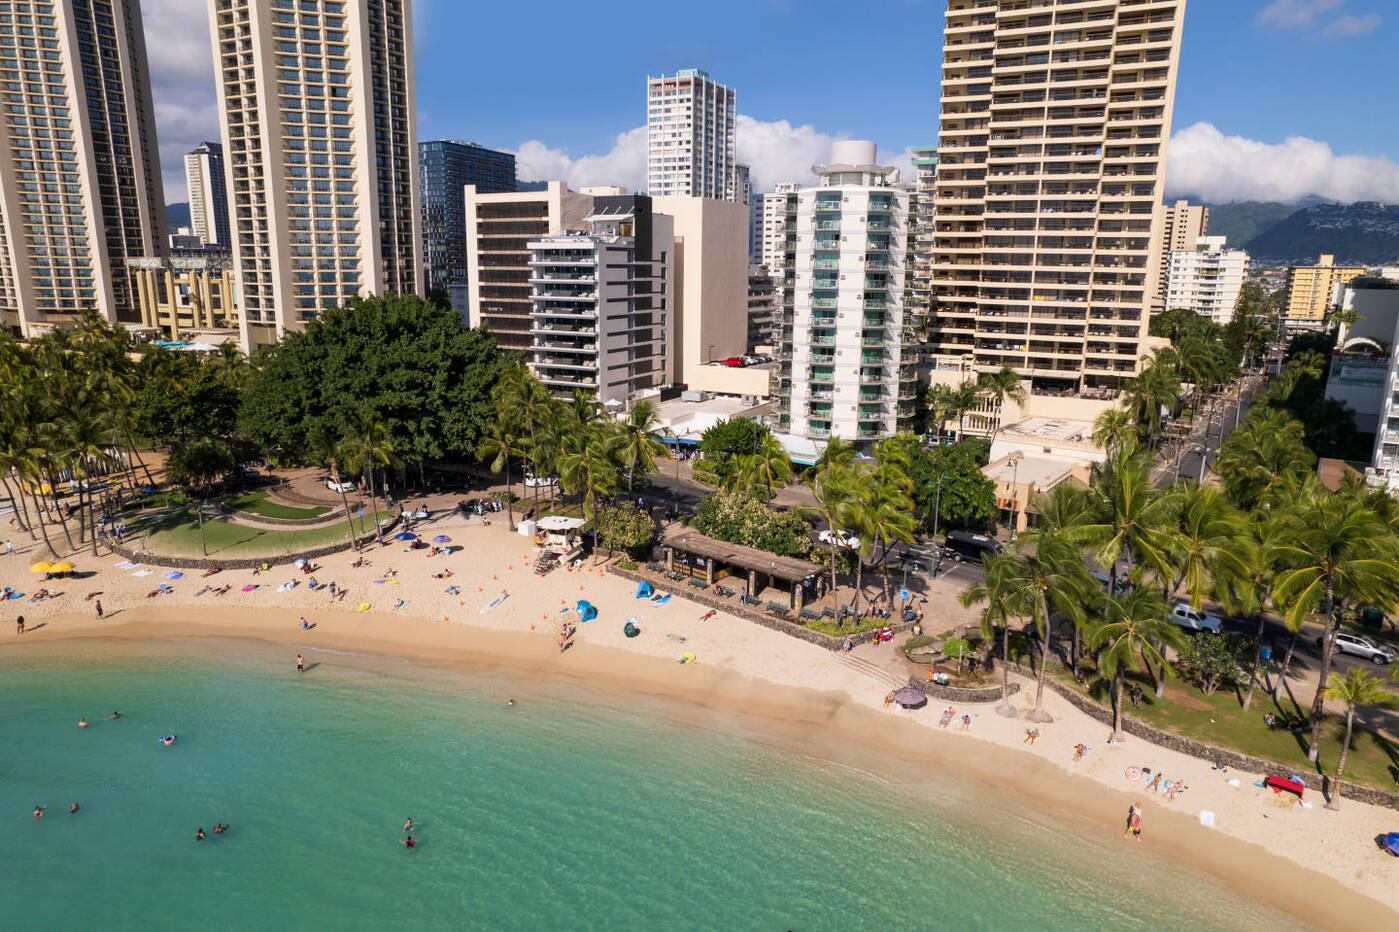 Overhead view of Waikiki beachfront and cityscape